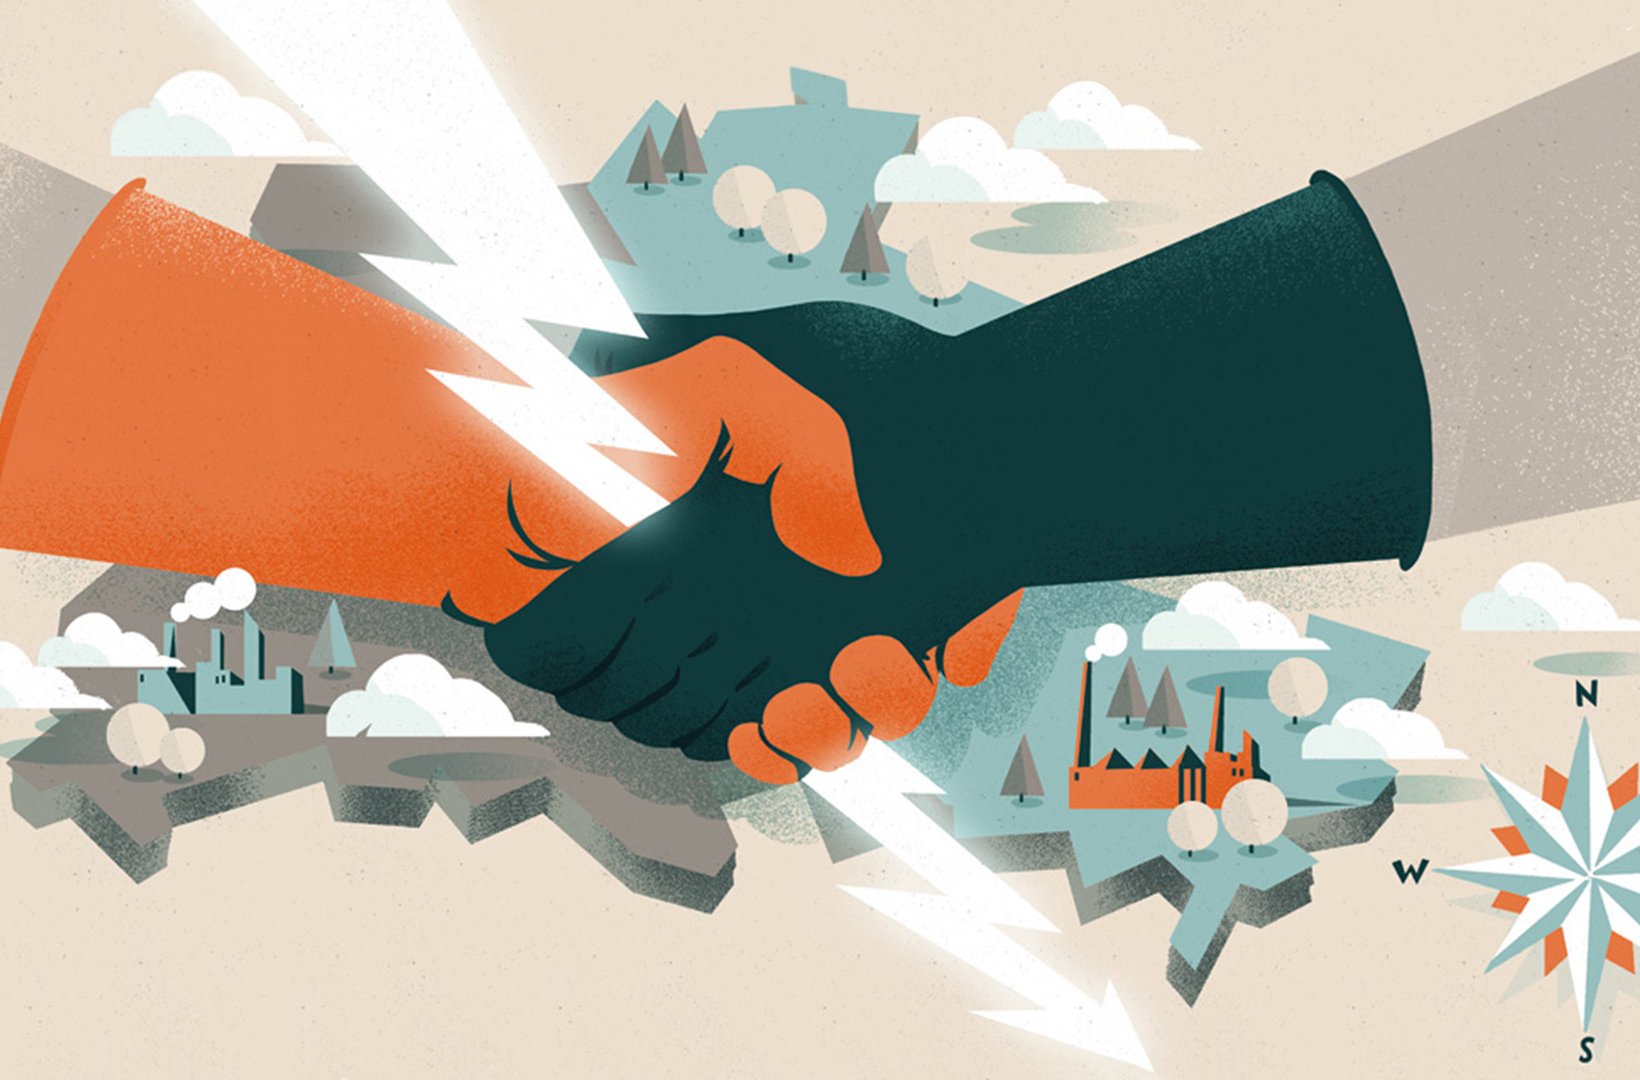 Illustration of the handshake dividing Berlin